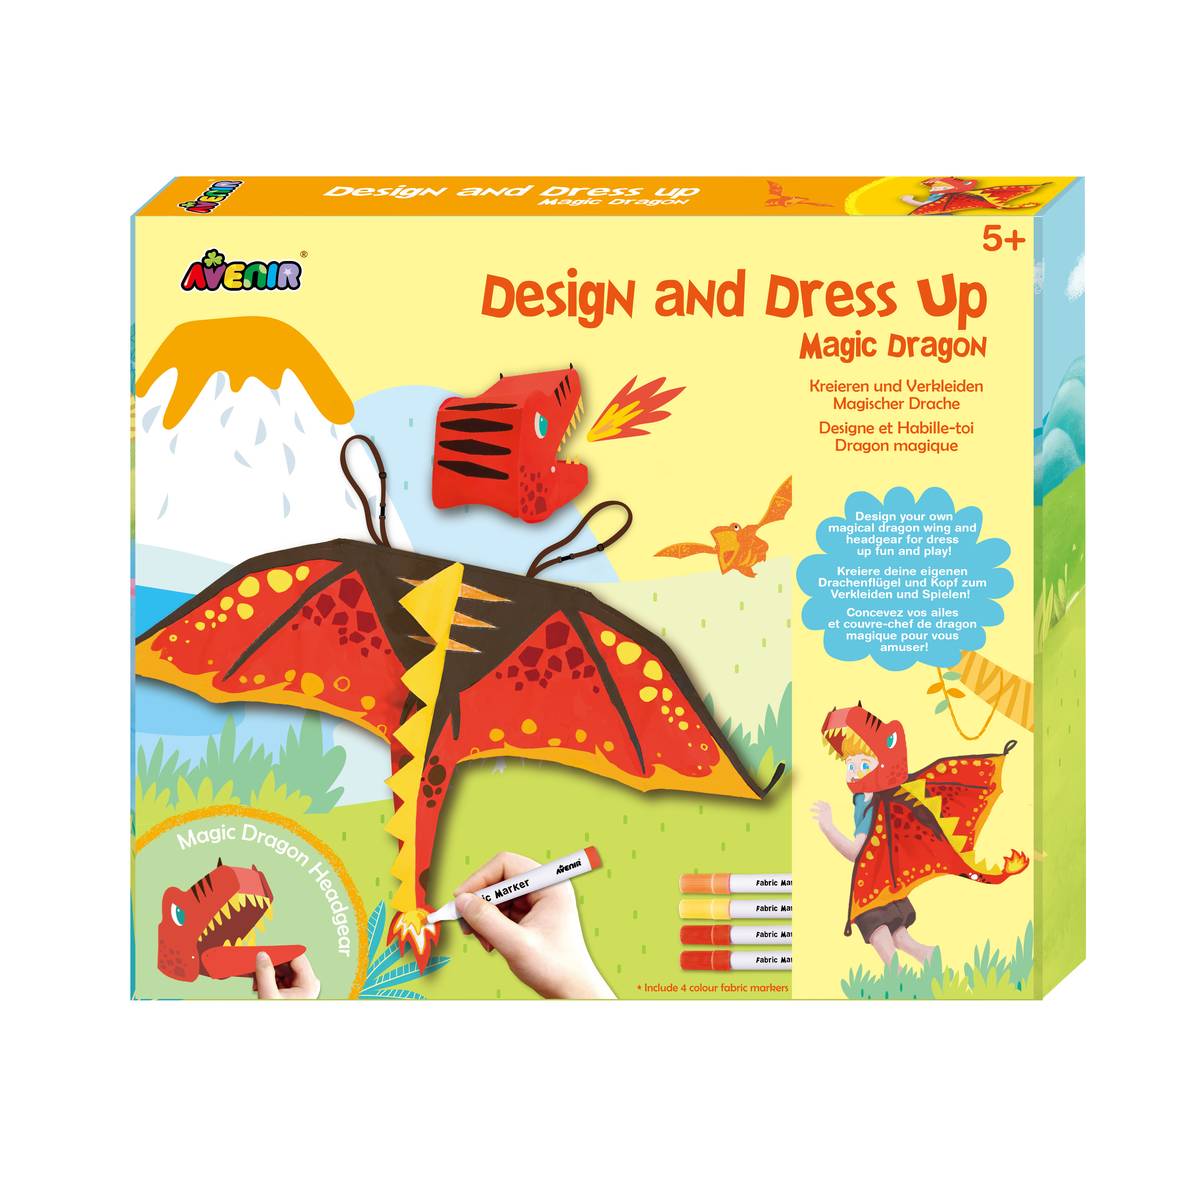 Design and Dress Up Magic Dragon